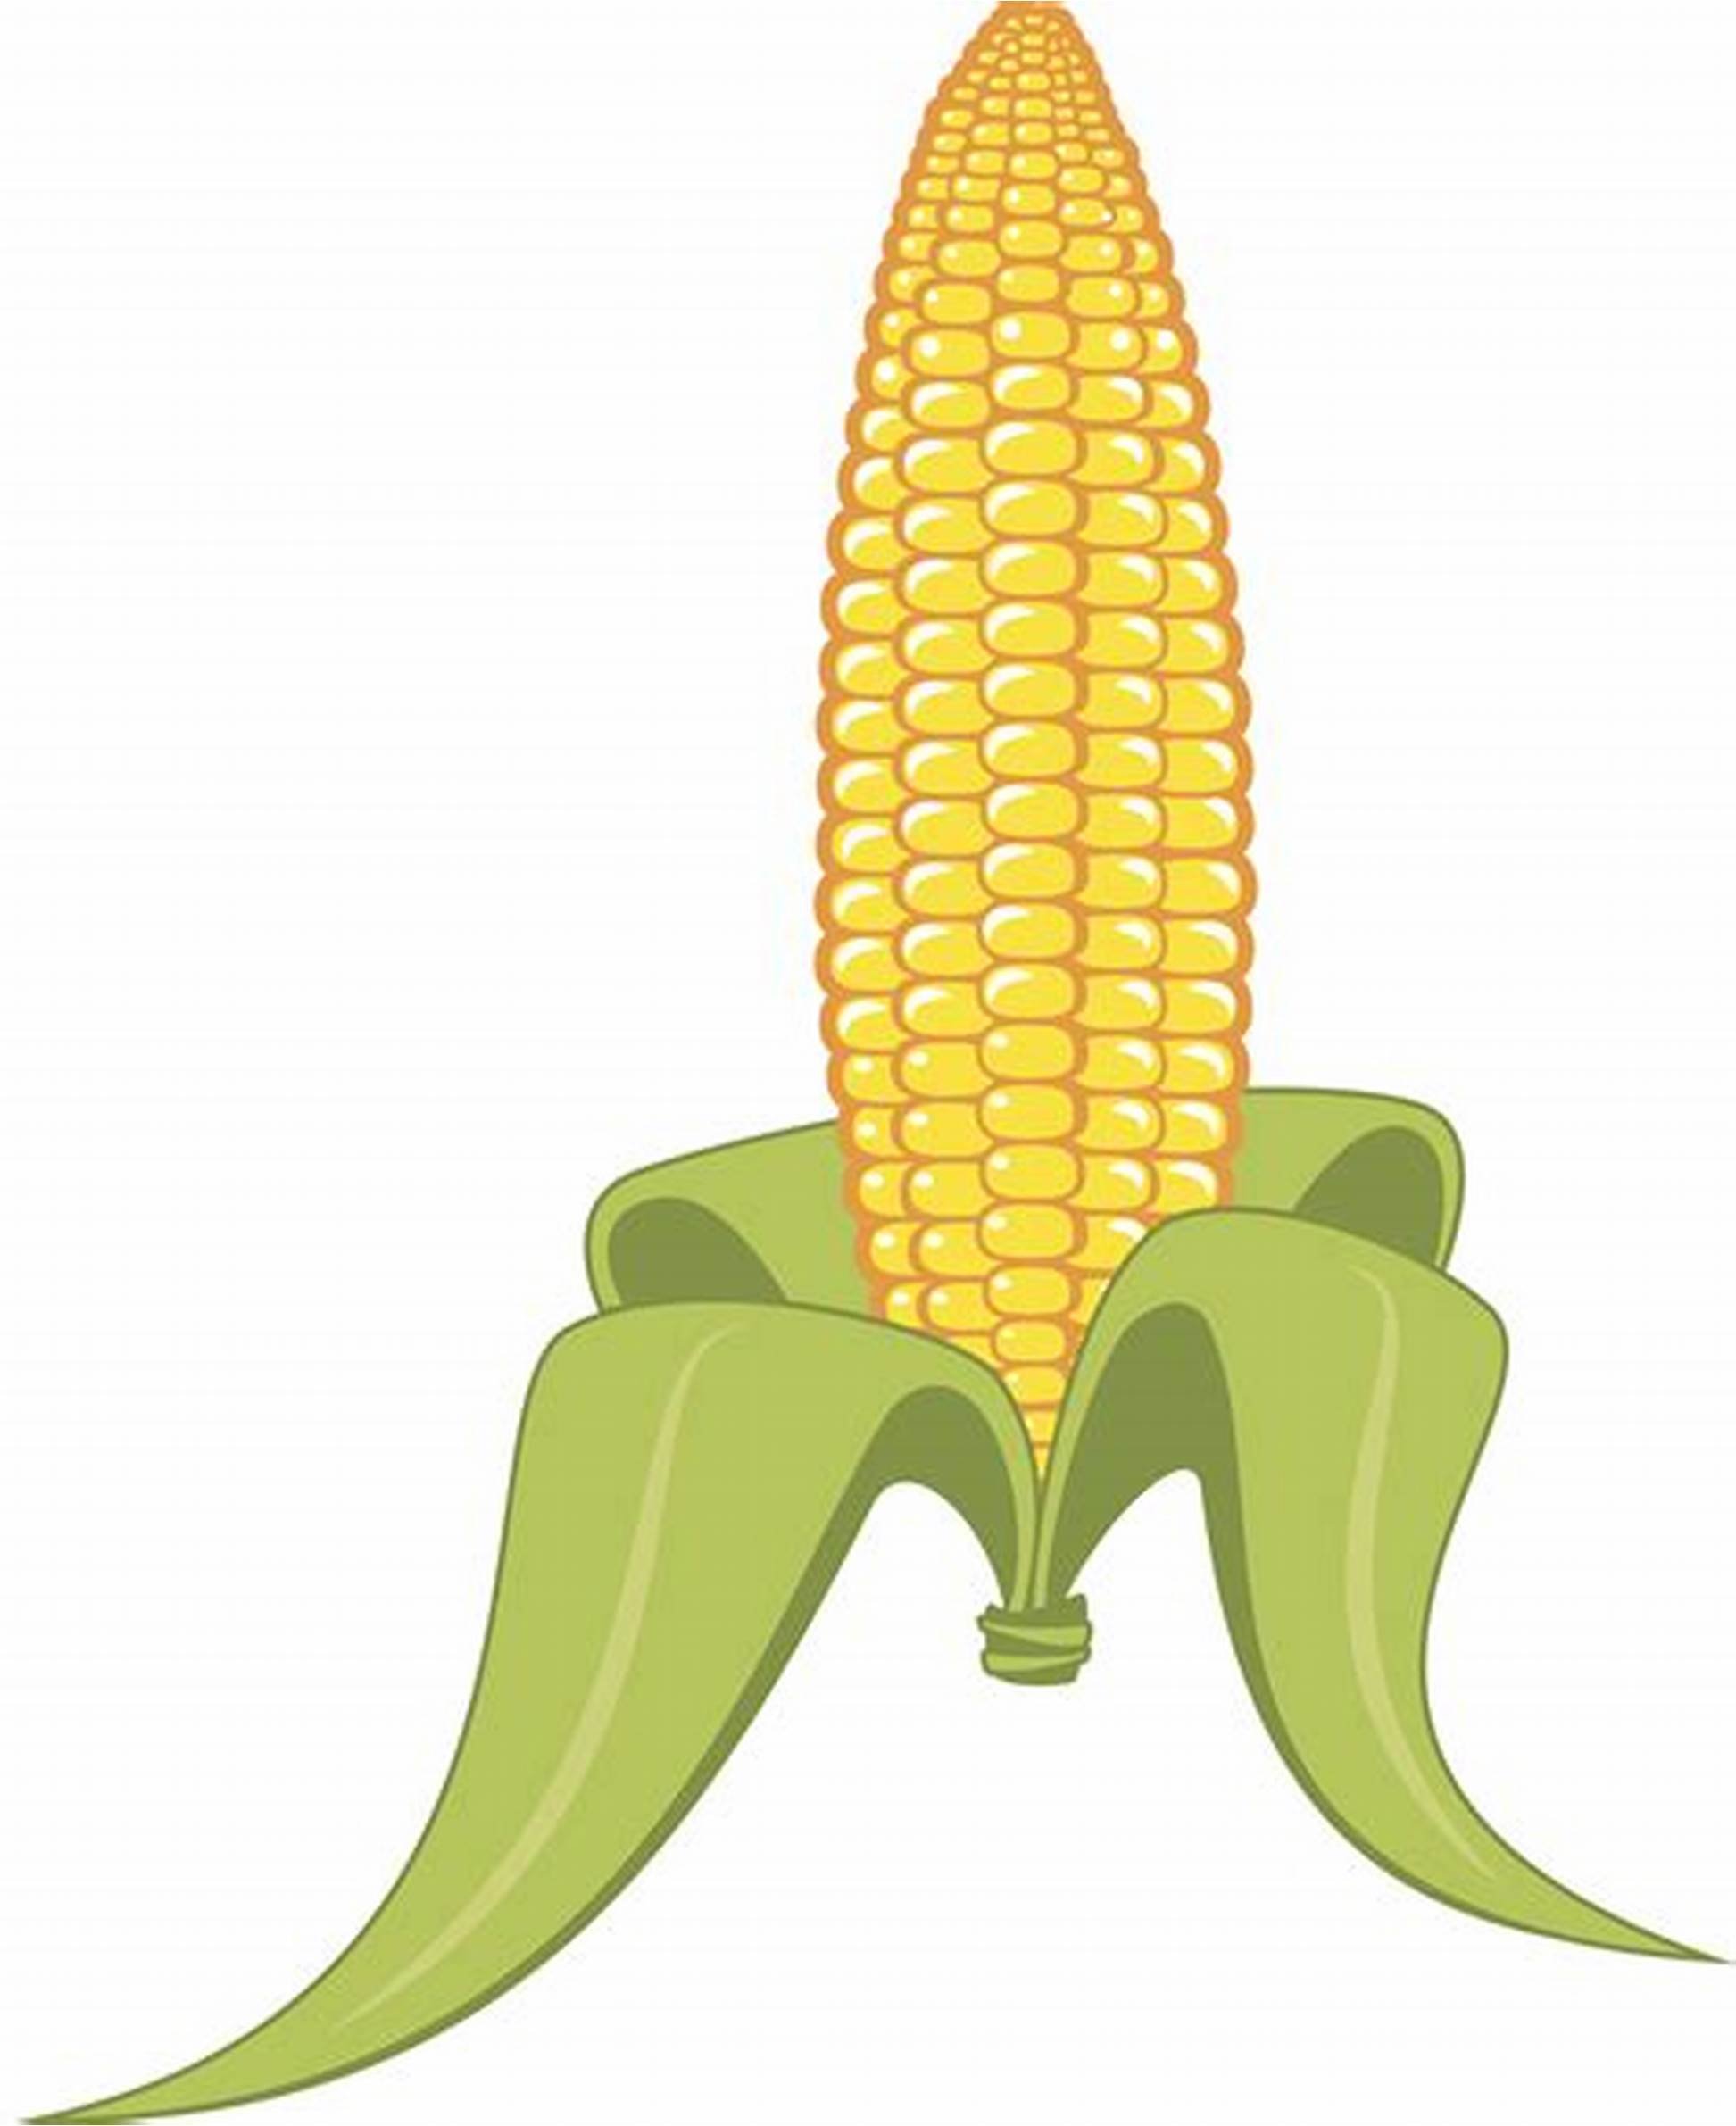 Картинка початок кукурузы для детей